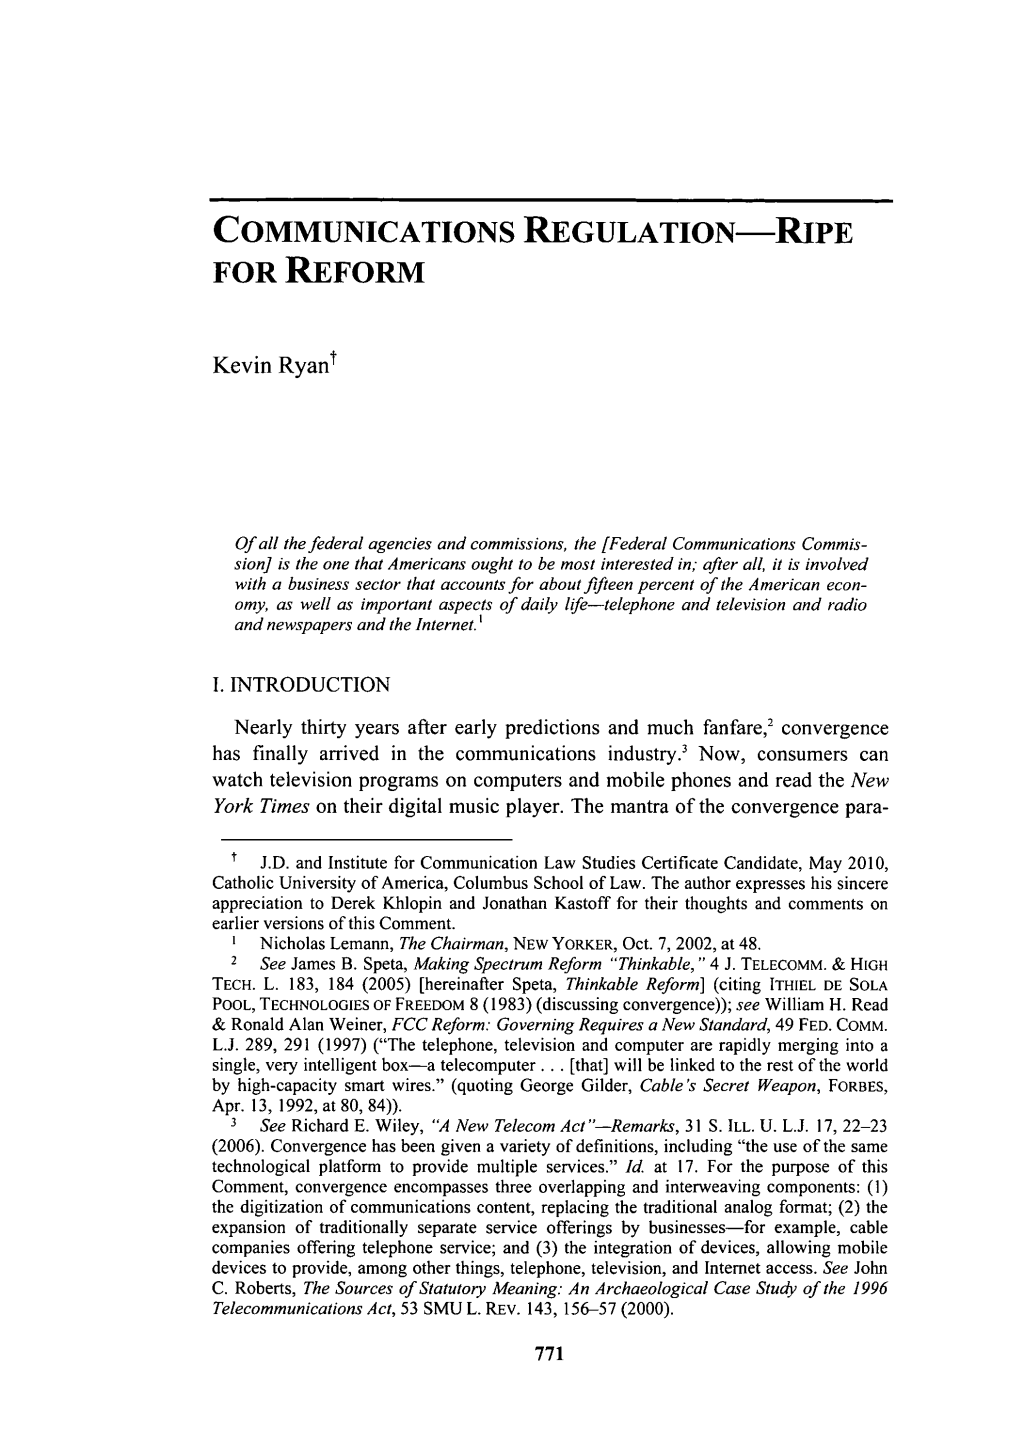 Communications Regulation-Ripe for Reform